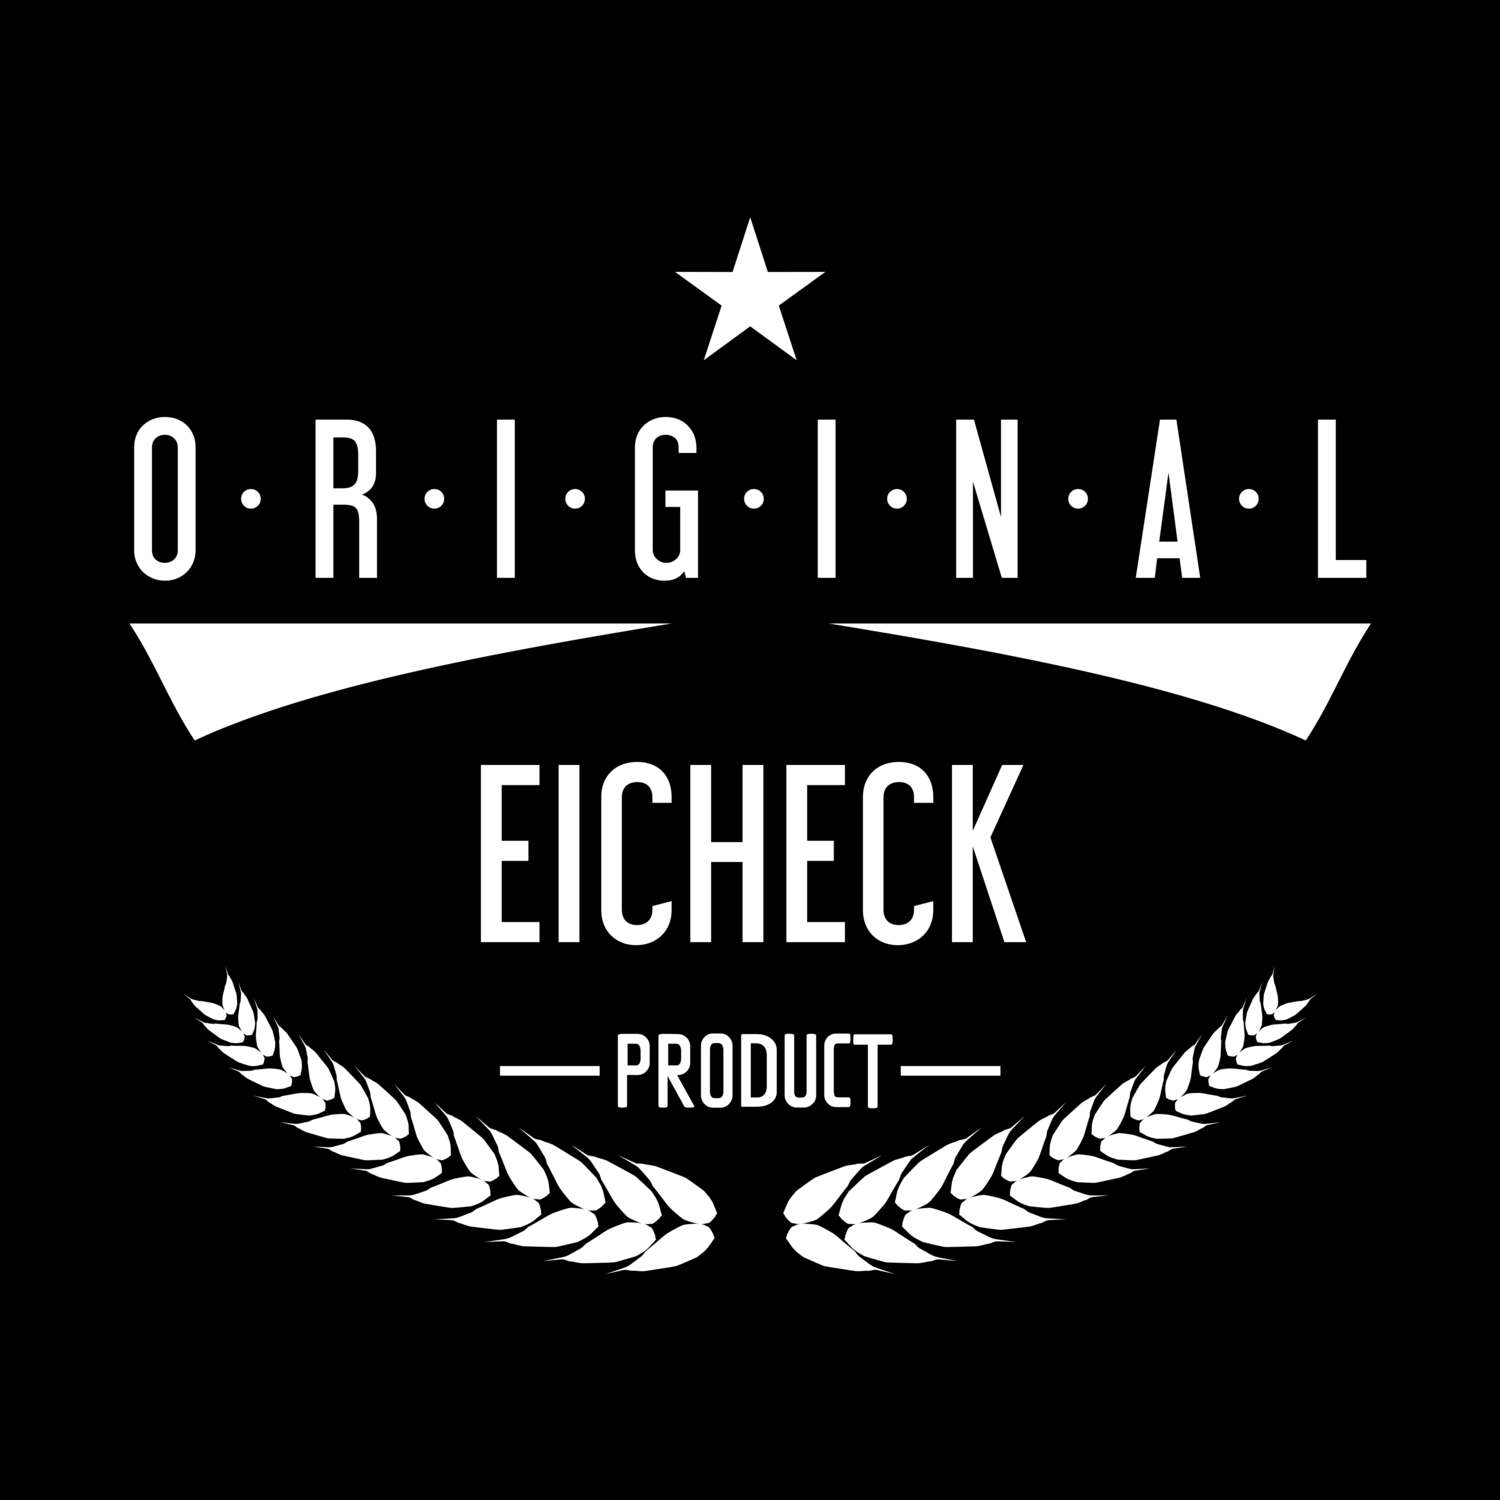 Eicheck T-Shirt »Original Product«